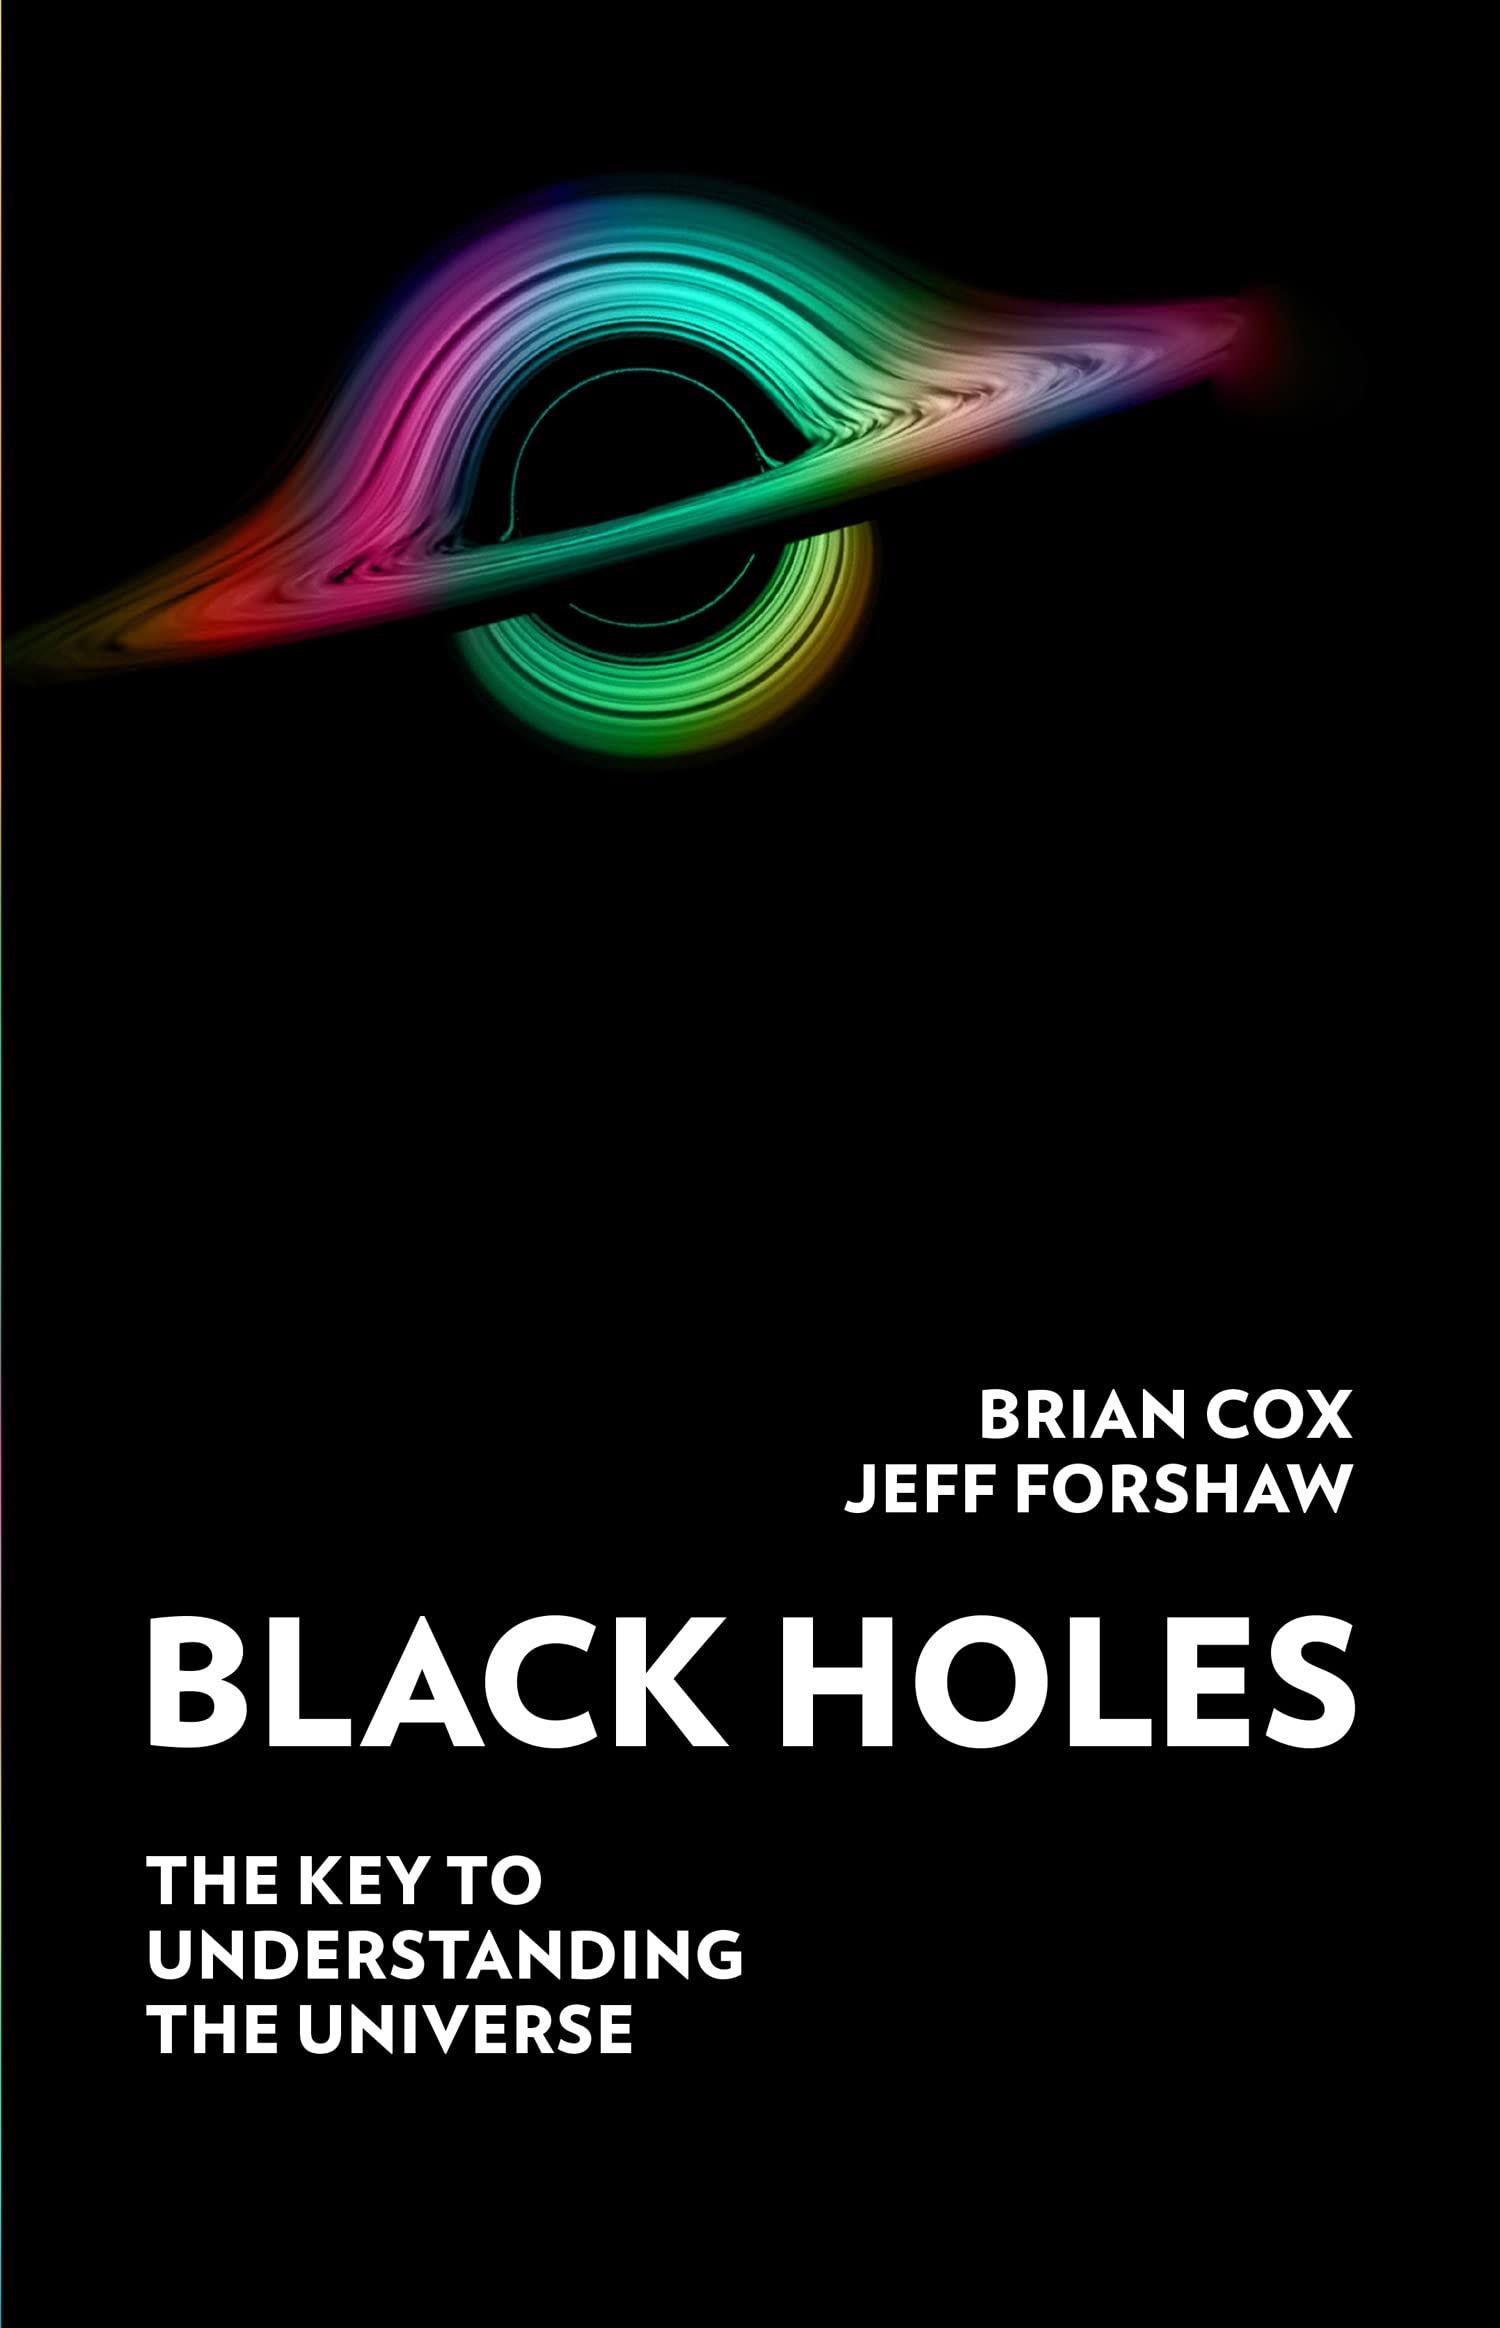 Black Holes by Professor Brian Cox